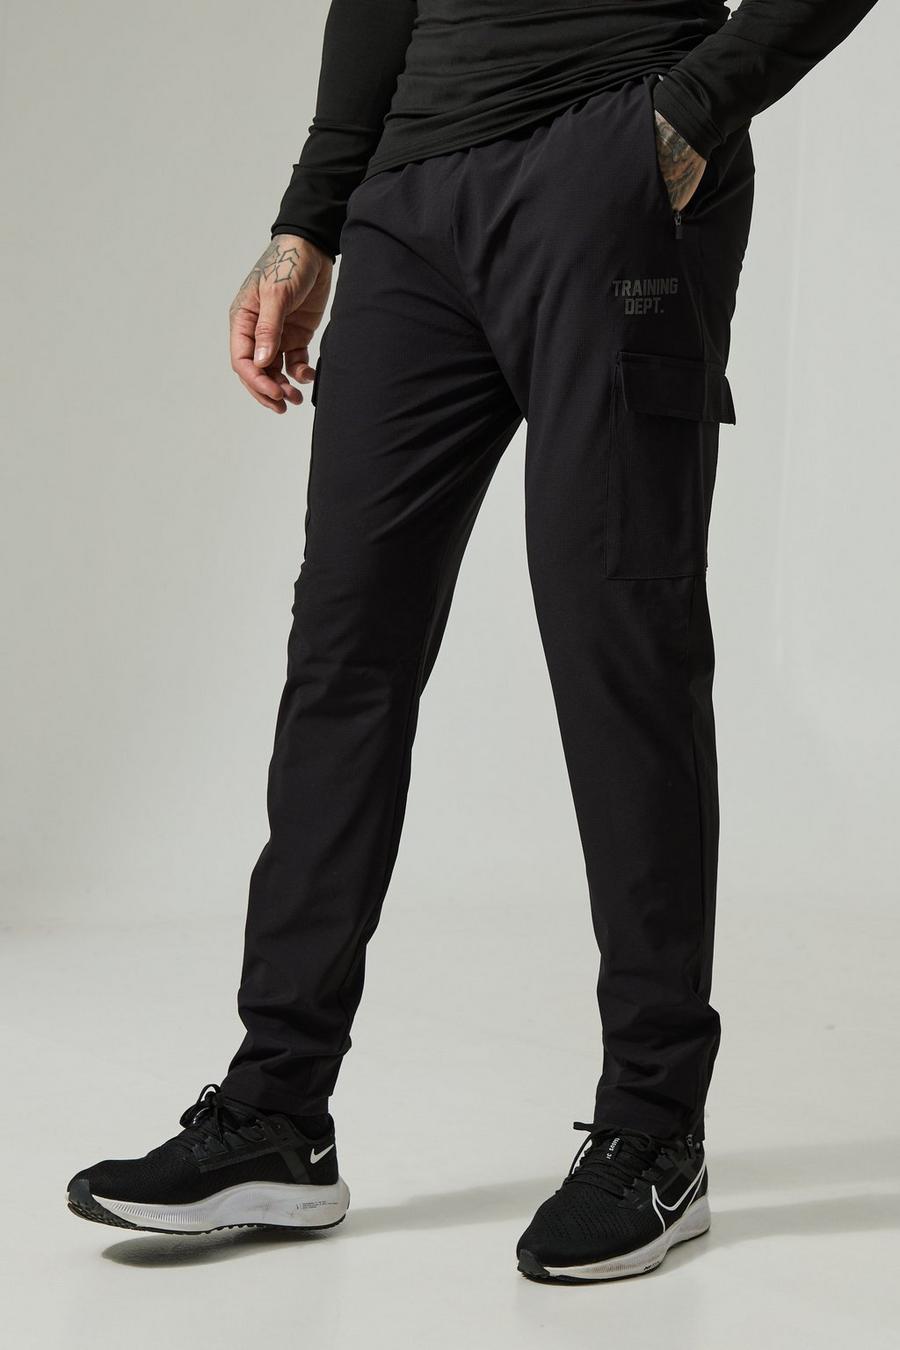 Pantalón deportivo Tall Active cargo ajustado, Black image number 1